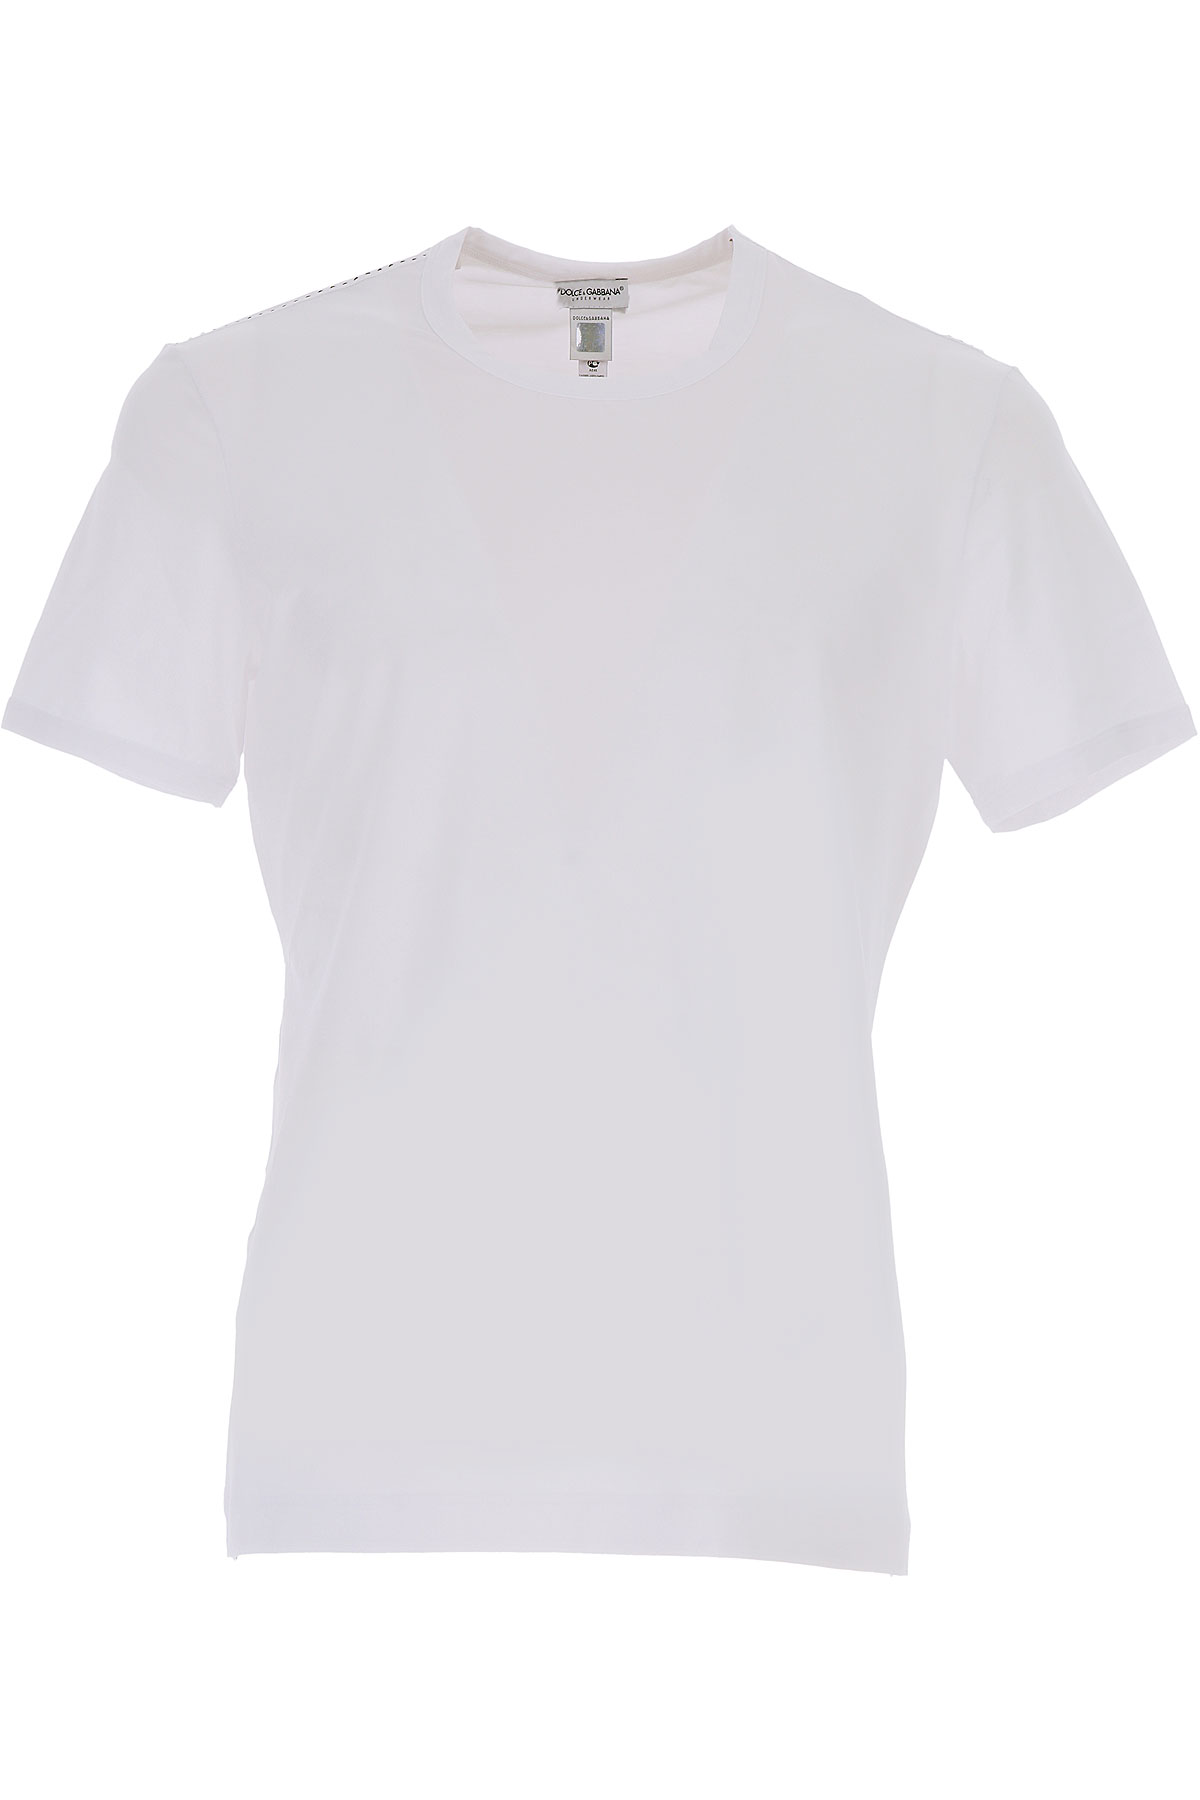 Dolce & Gabbana T-shirt Homme , Blanc, Coton, 2017, L M S XL